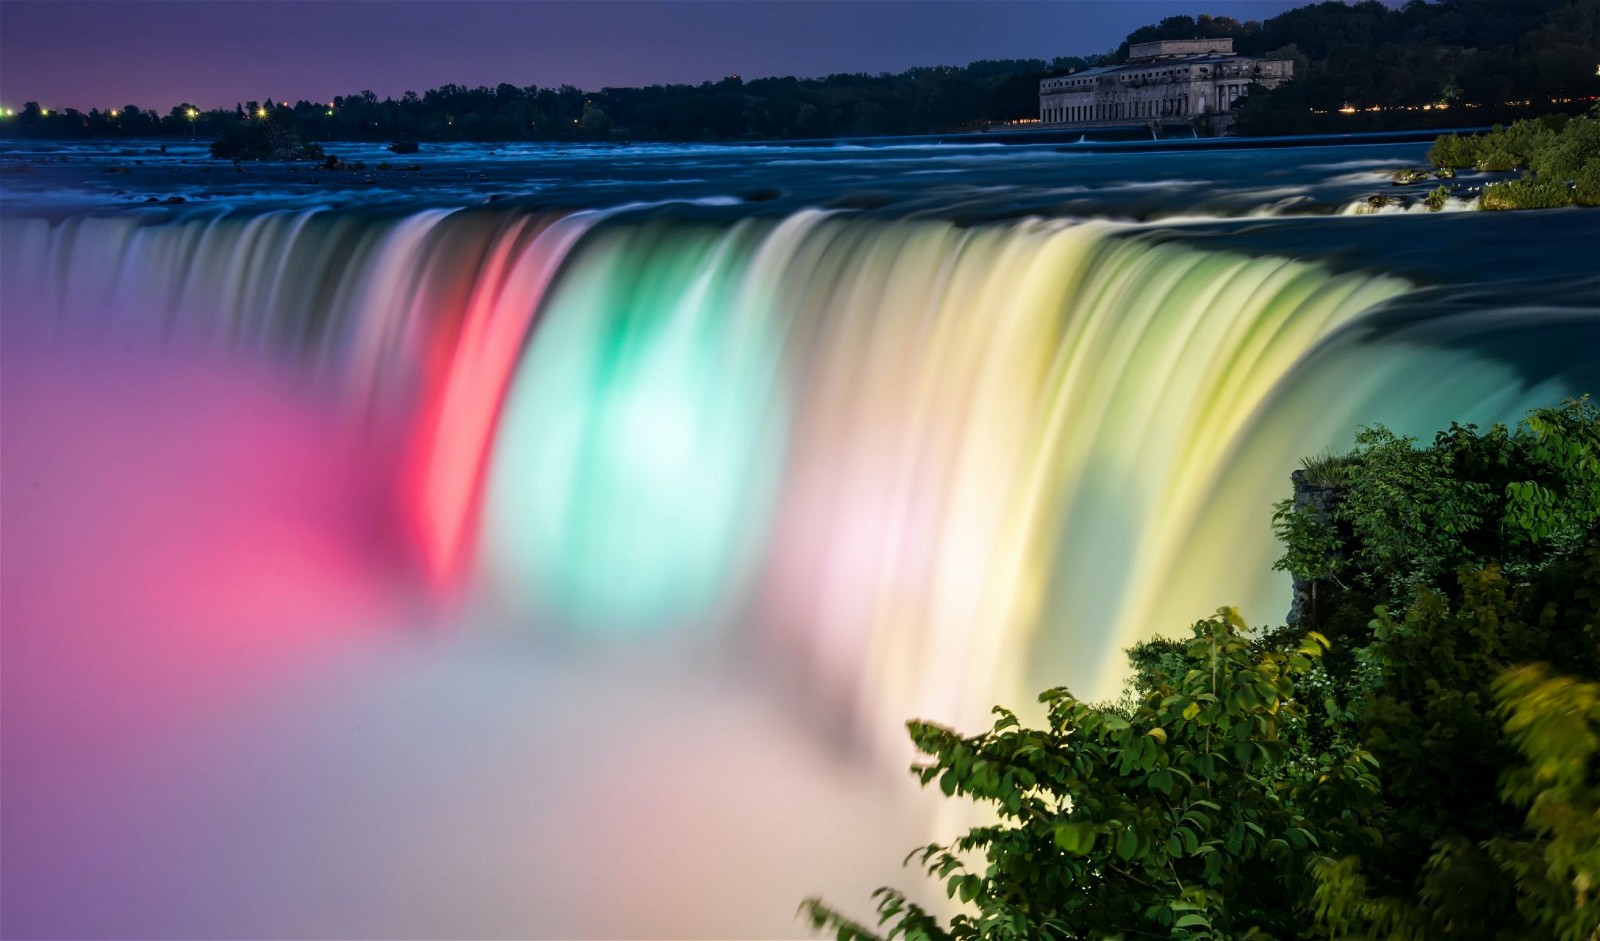 Niagara Falls remains a popular tourist attraction